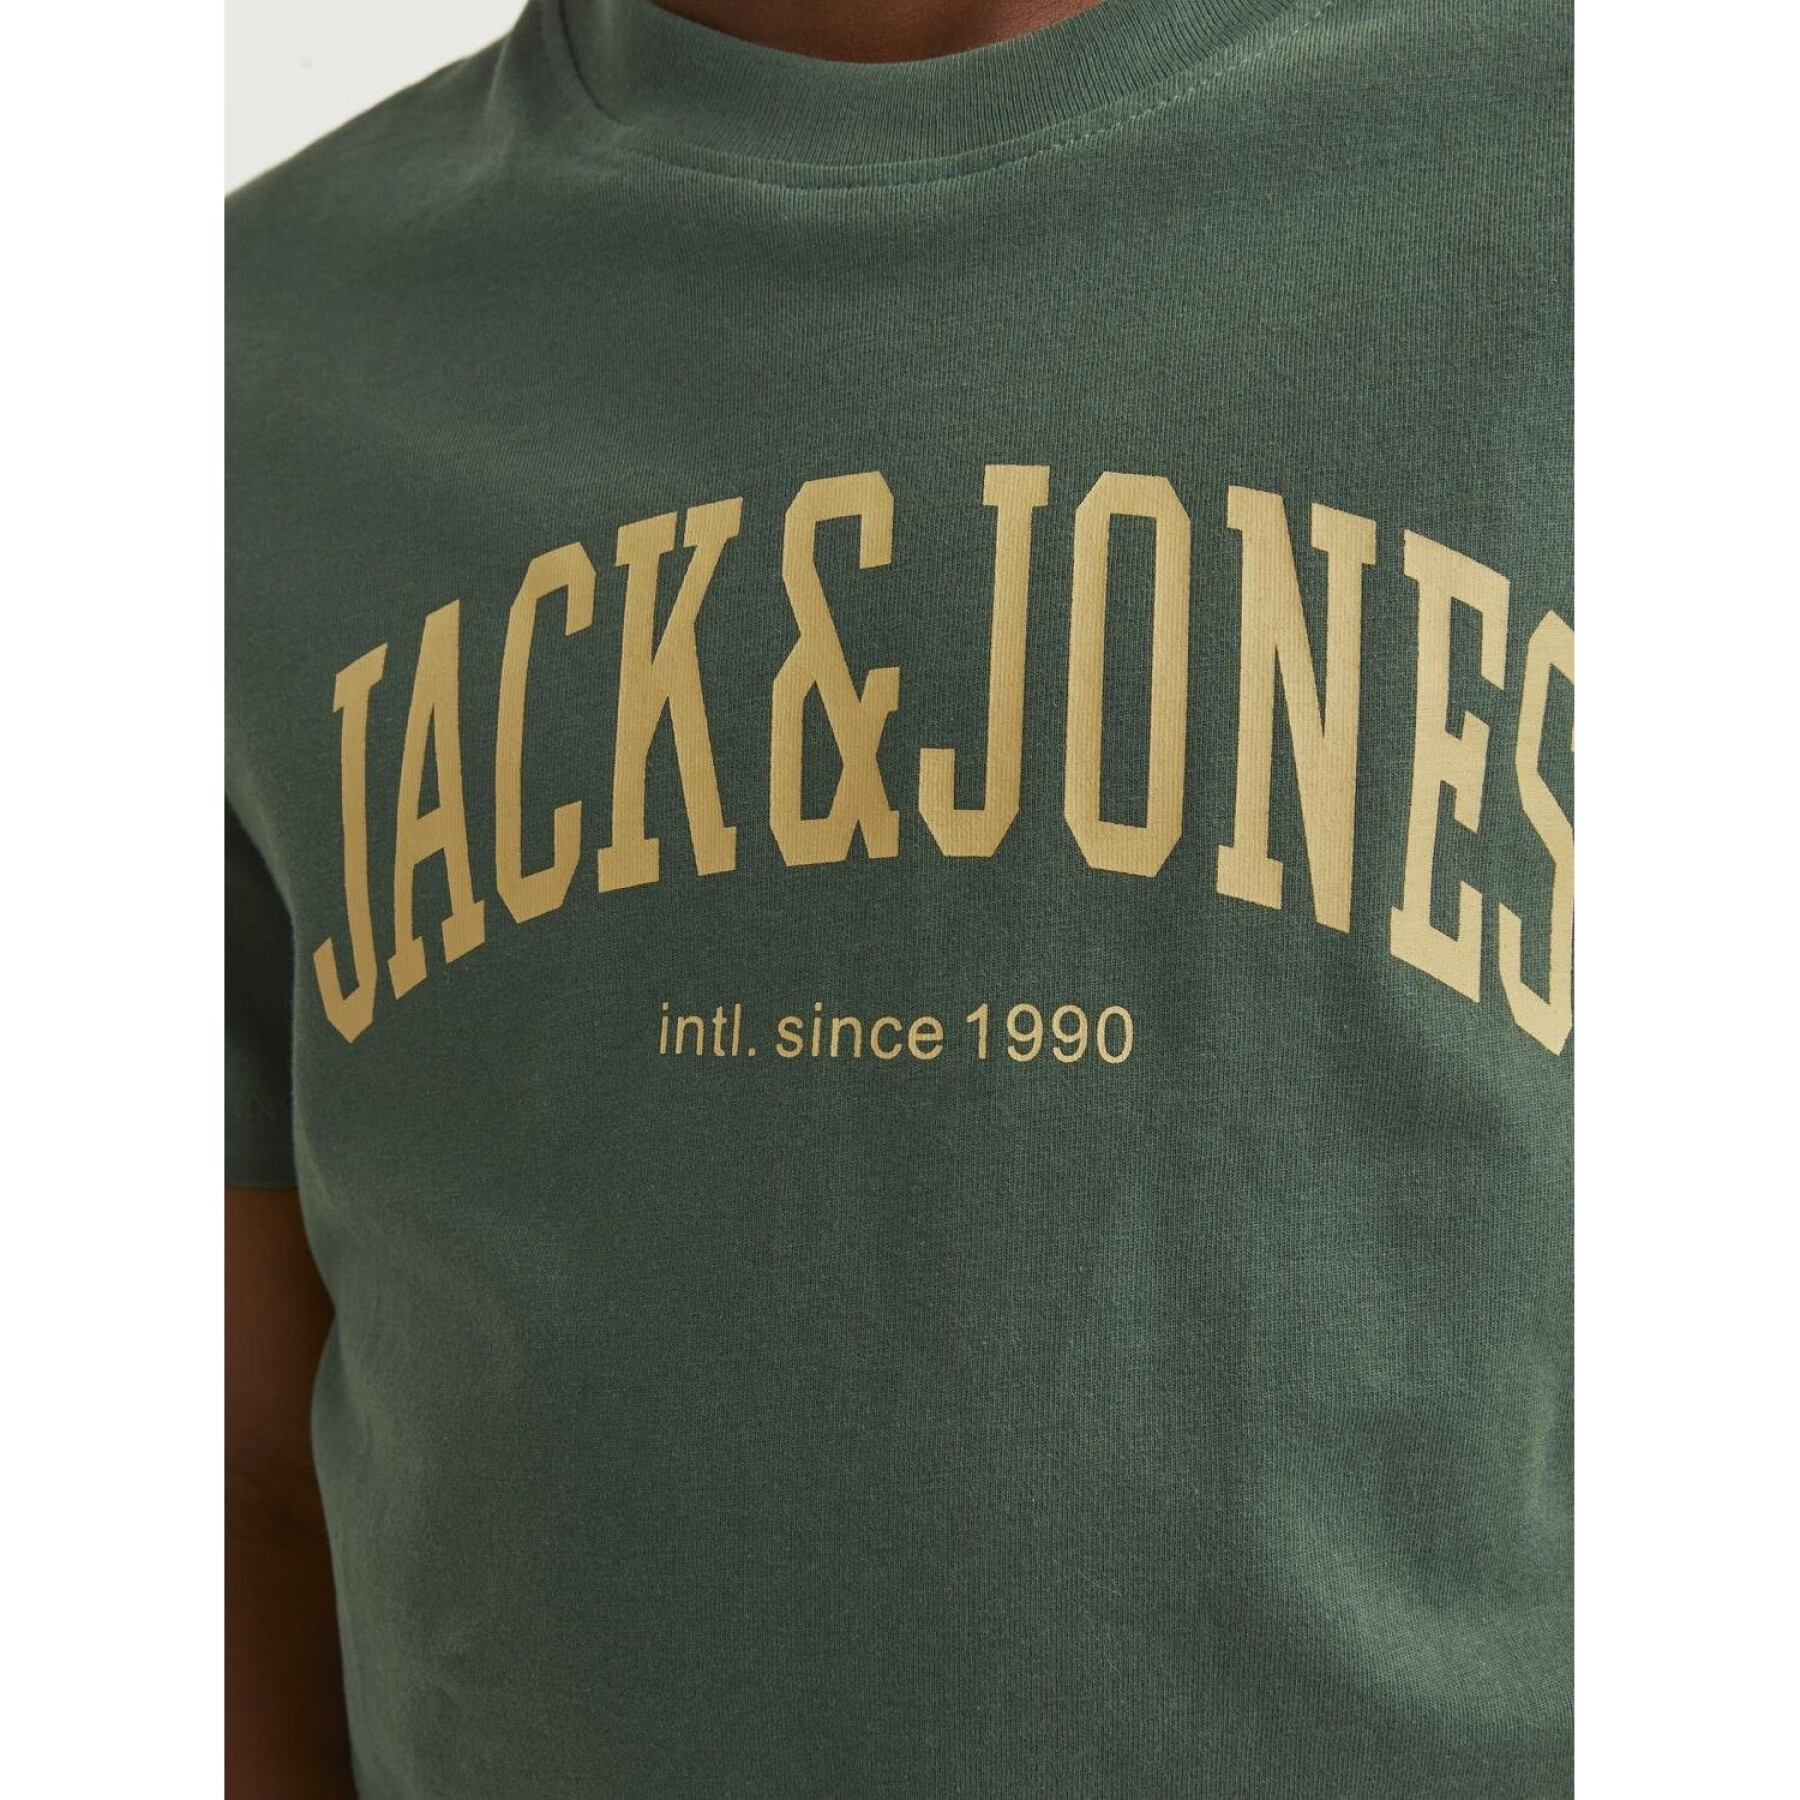 Kinder-T-shirt Jack & Jones Josh